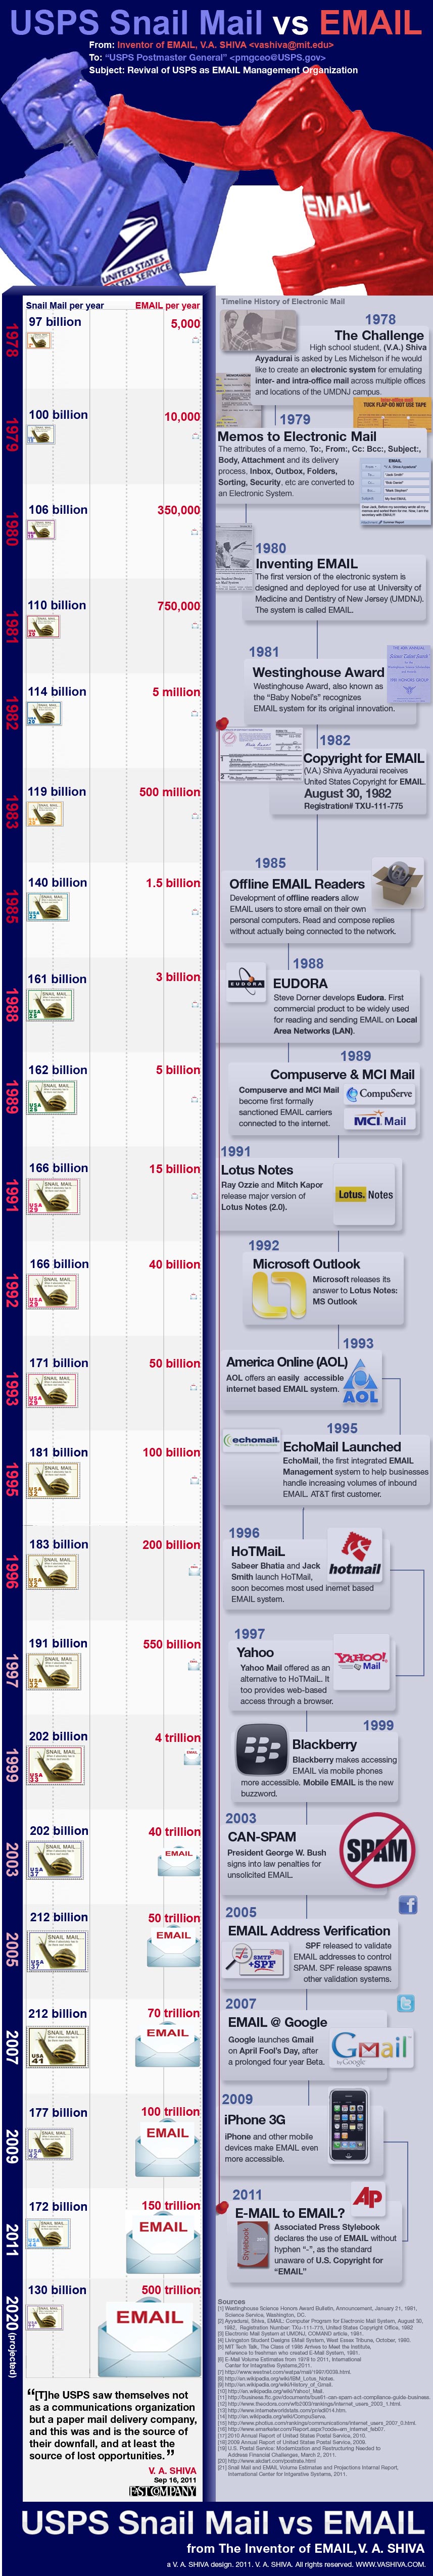 V. A. SHIVA The History of EMAIL Vs. USPS Snail Mail